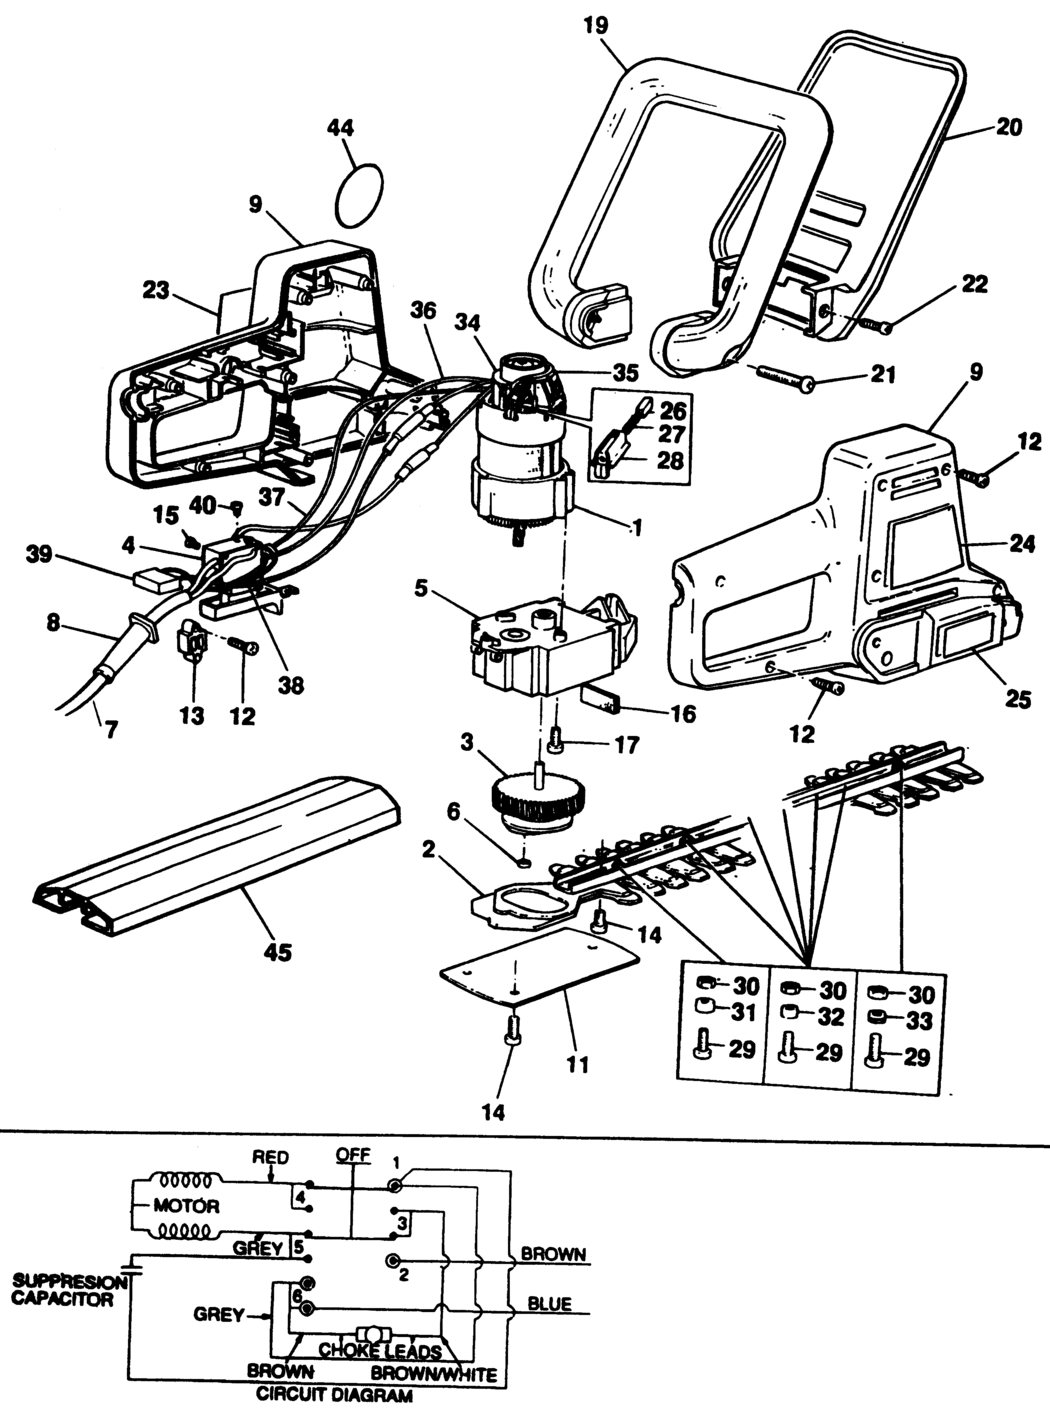 Black & Decker GT331 Type 1 Hedgeclipper Spare Parts